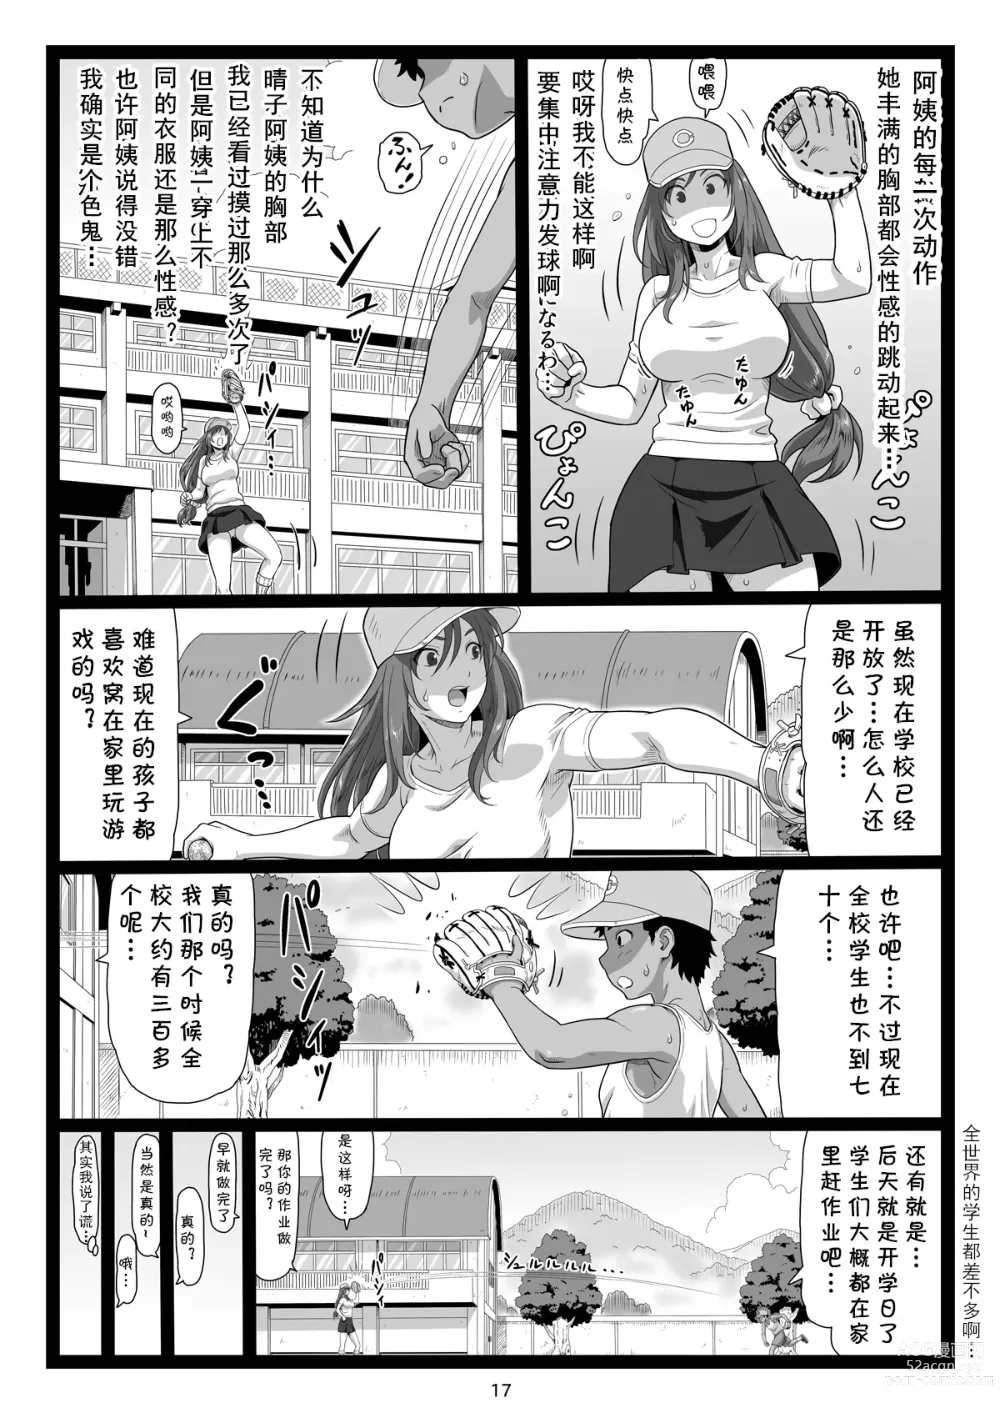 Page 17 of doujinshi Natsuyasumi no Omoide Gekan